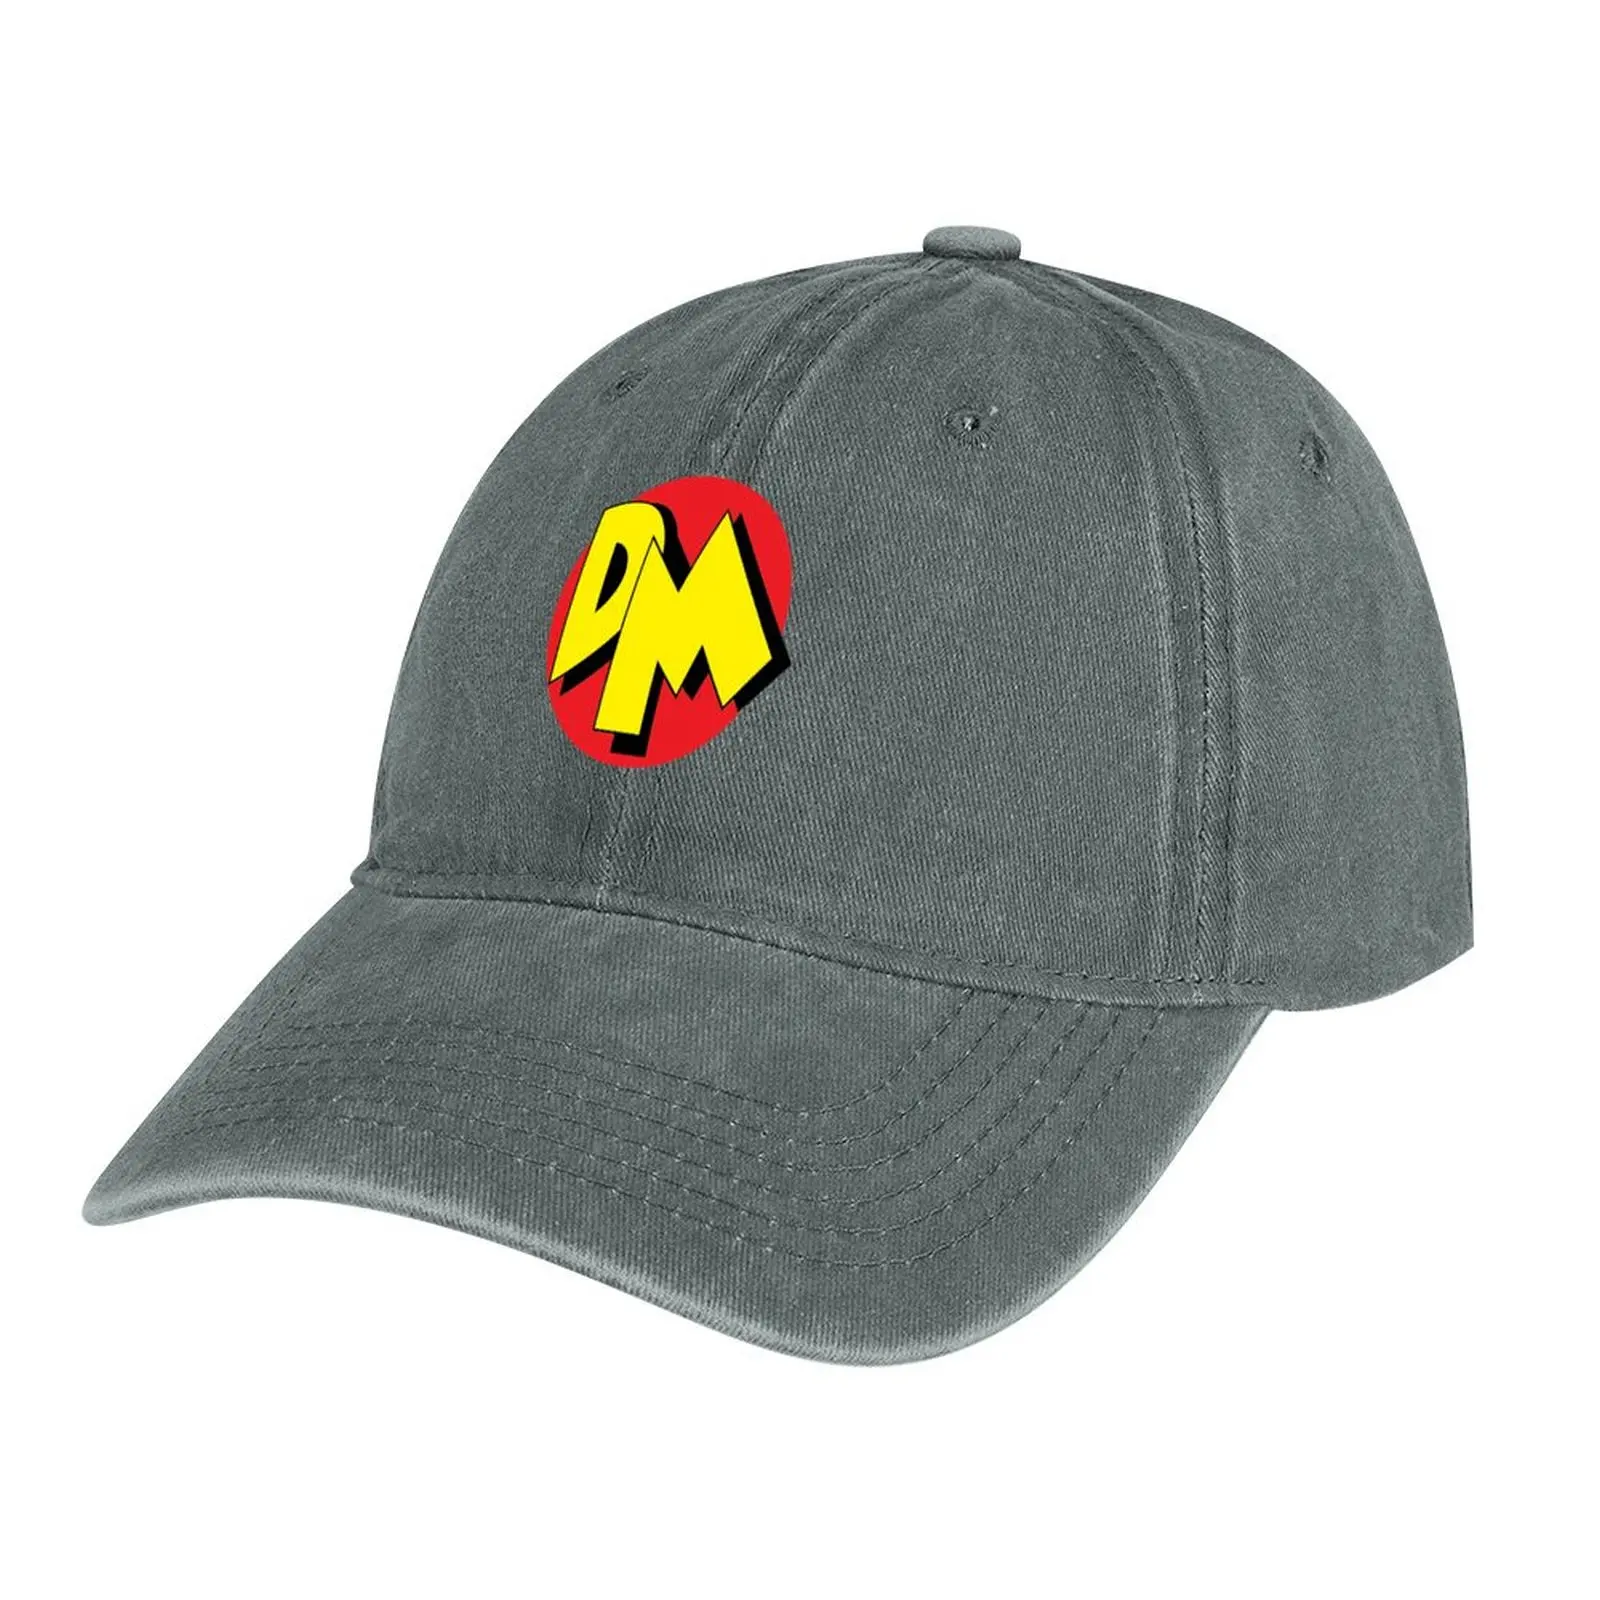 

DM in Circle Cowboy Hat Snap Back Hat Military Tactical Cap Trucker Hat Baseball Cap Caps For Men Women's